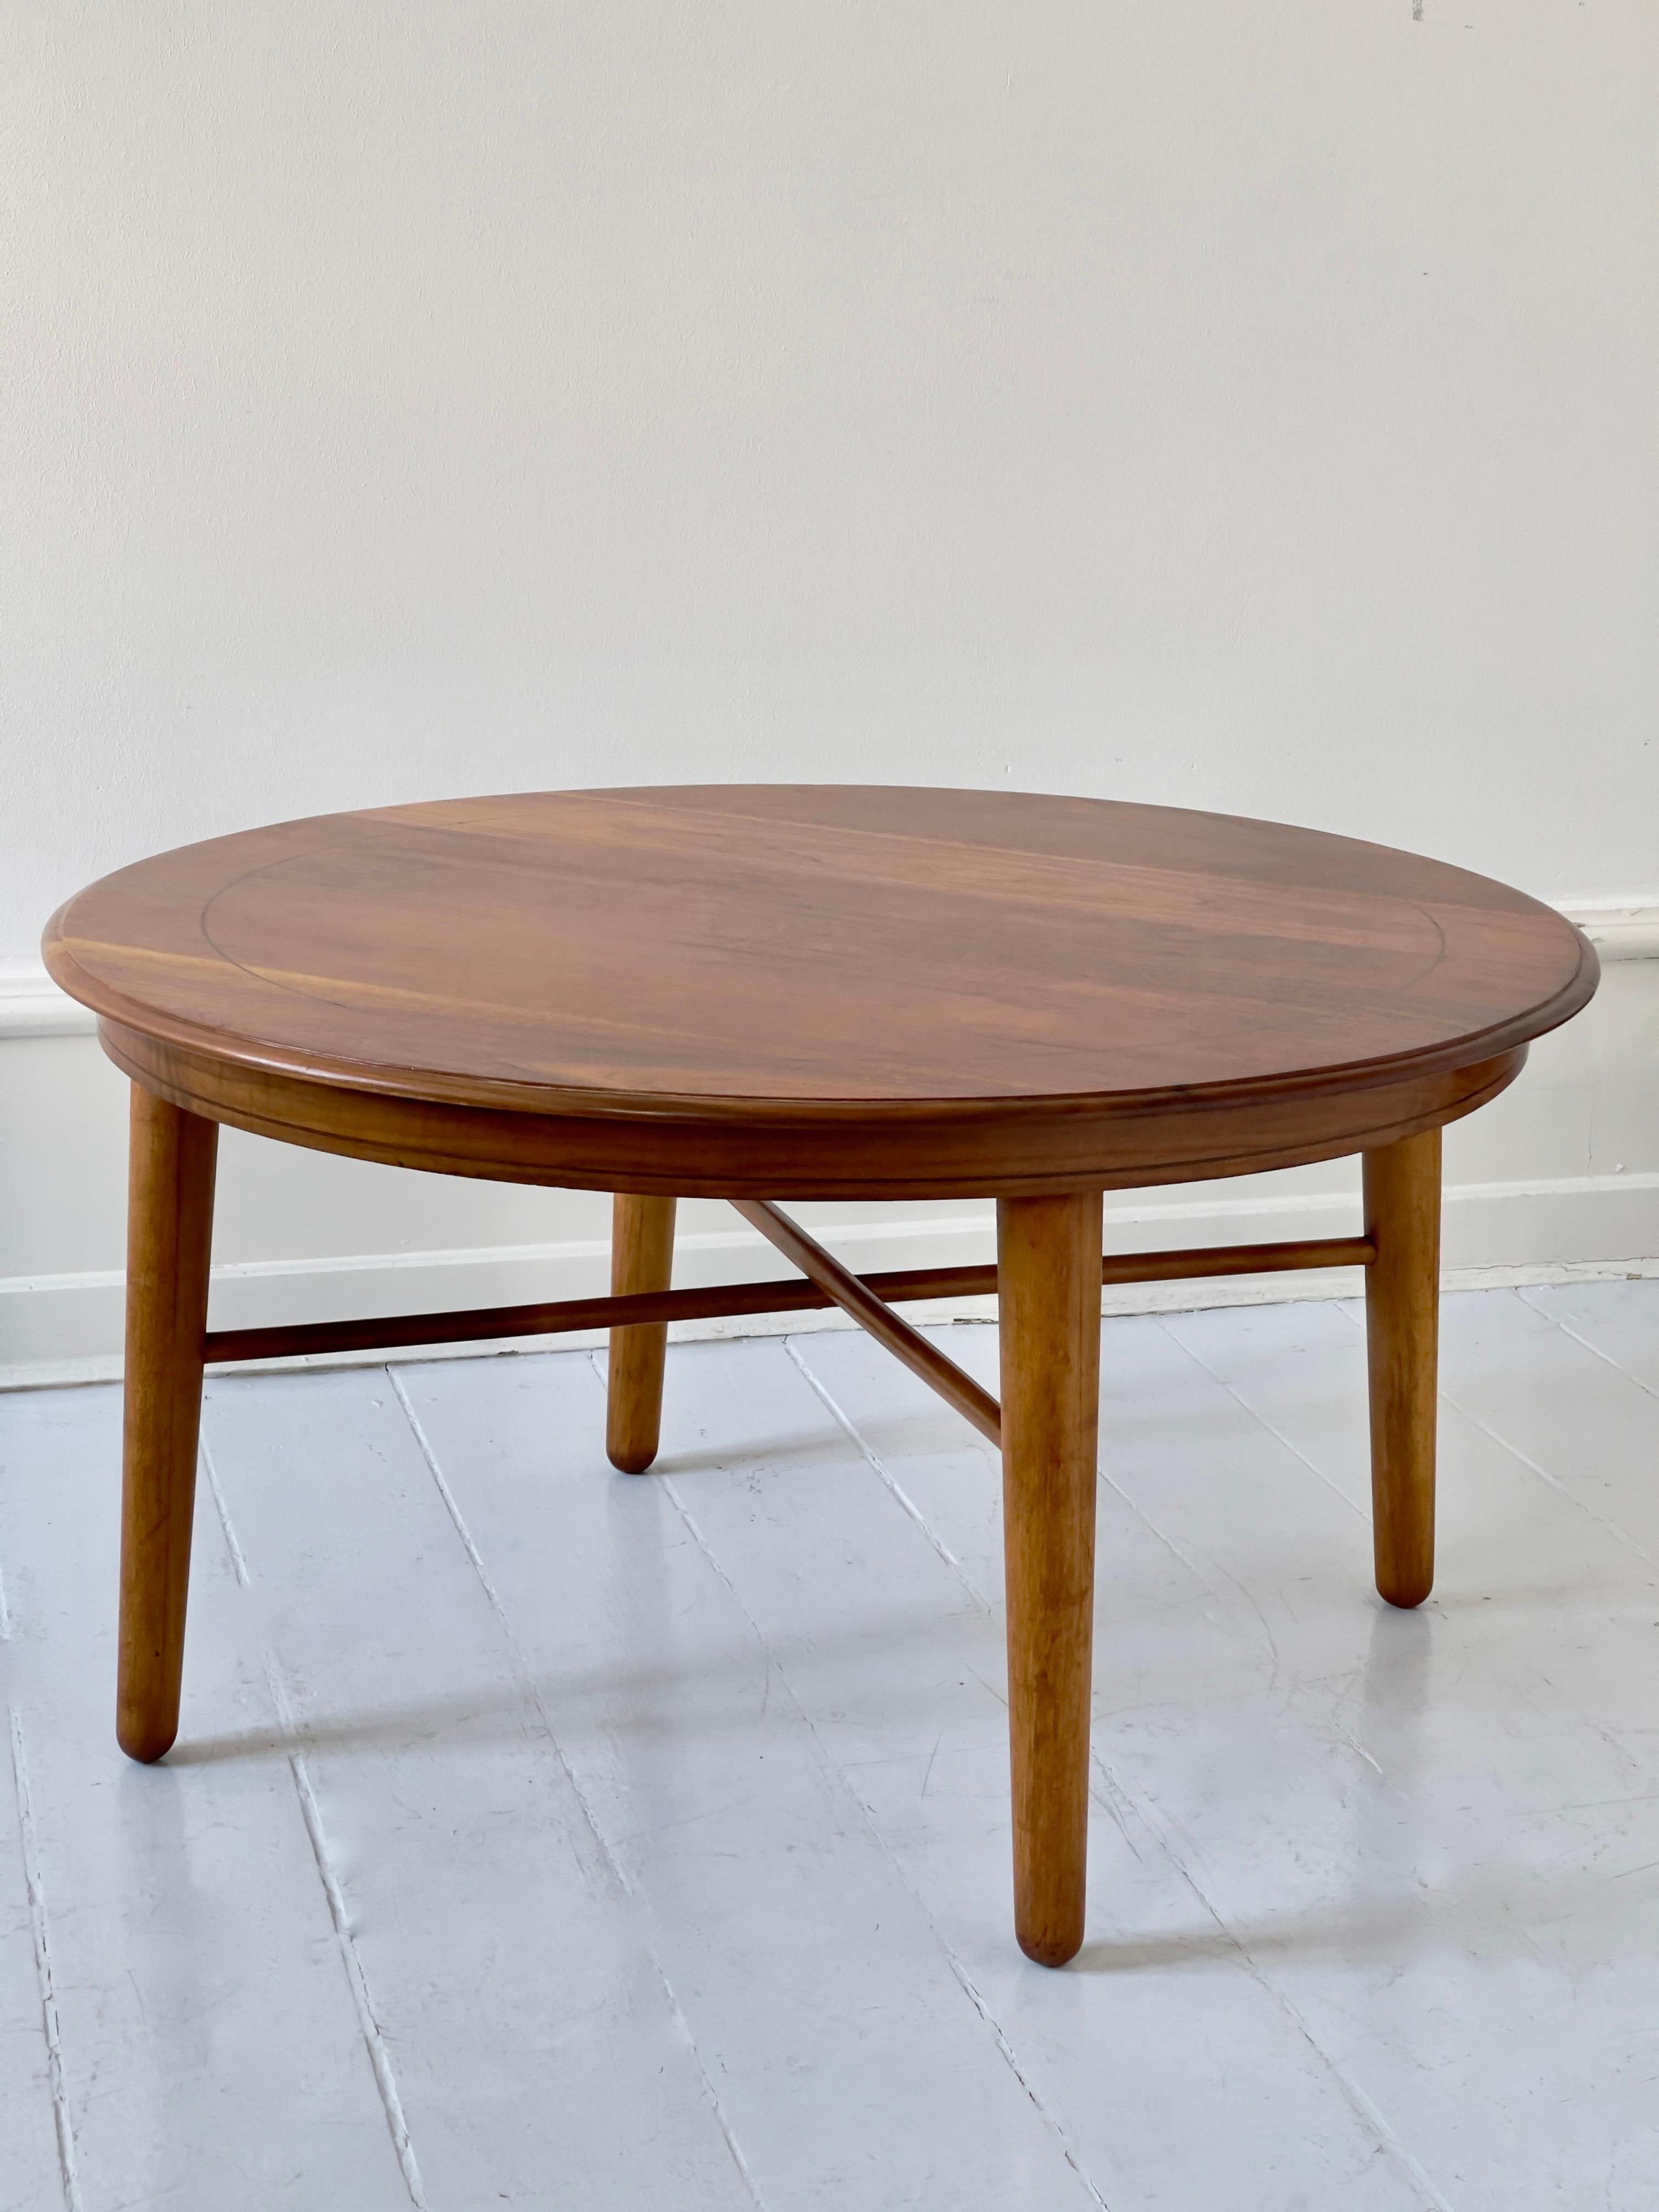 Scandinavian Modern 1940s Danish Coffee Table in Solid Nut Wood, Beech with intarsia of dark wood.. For Sale